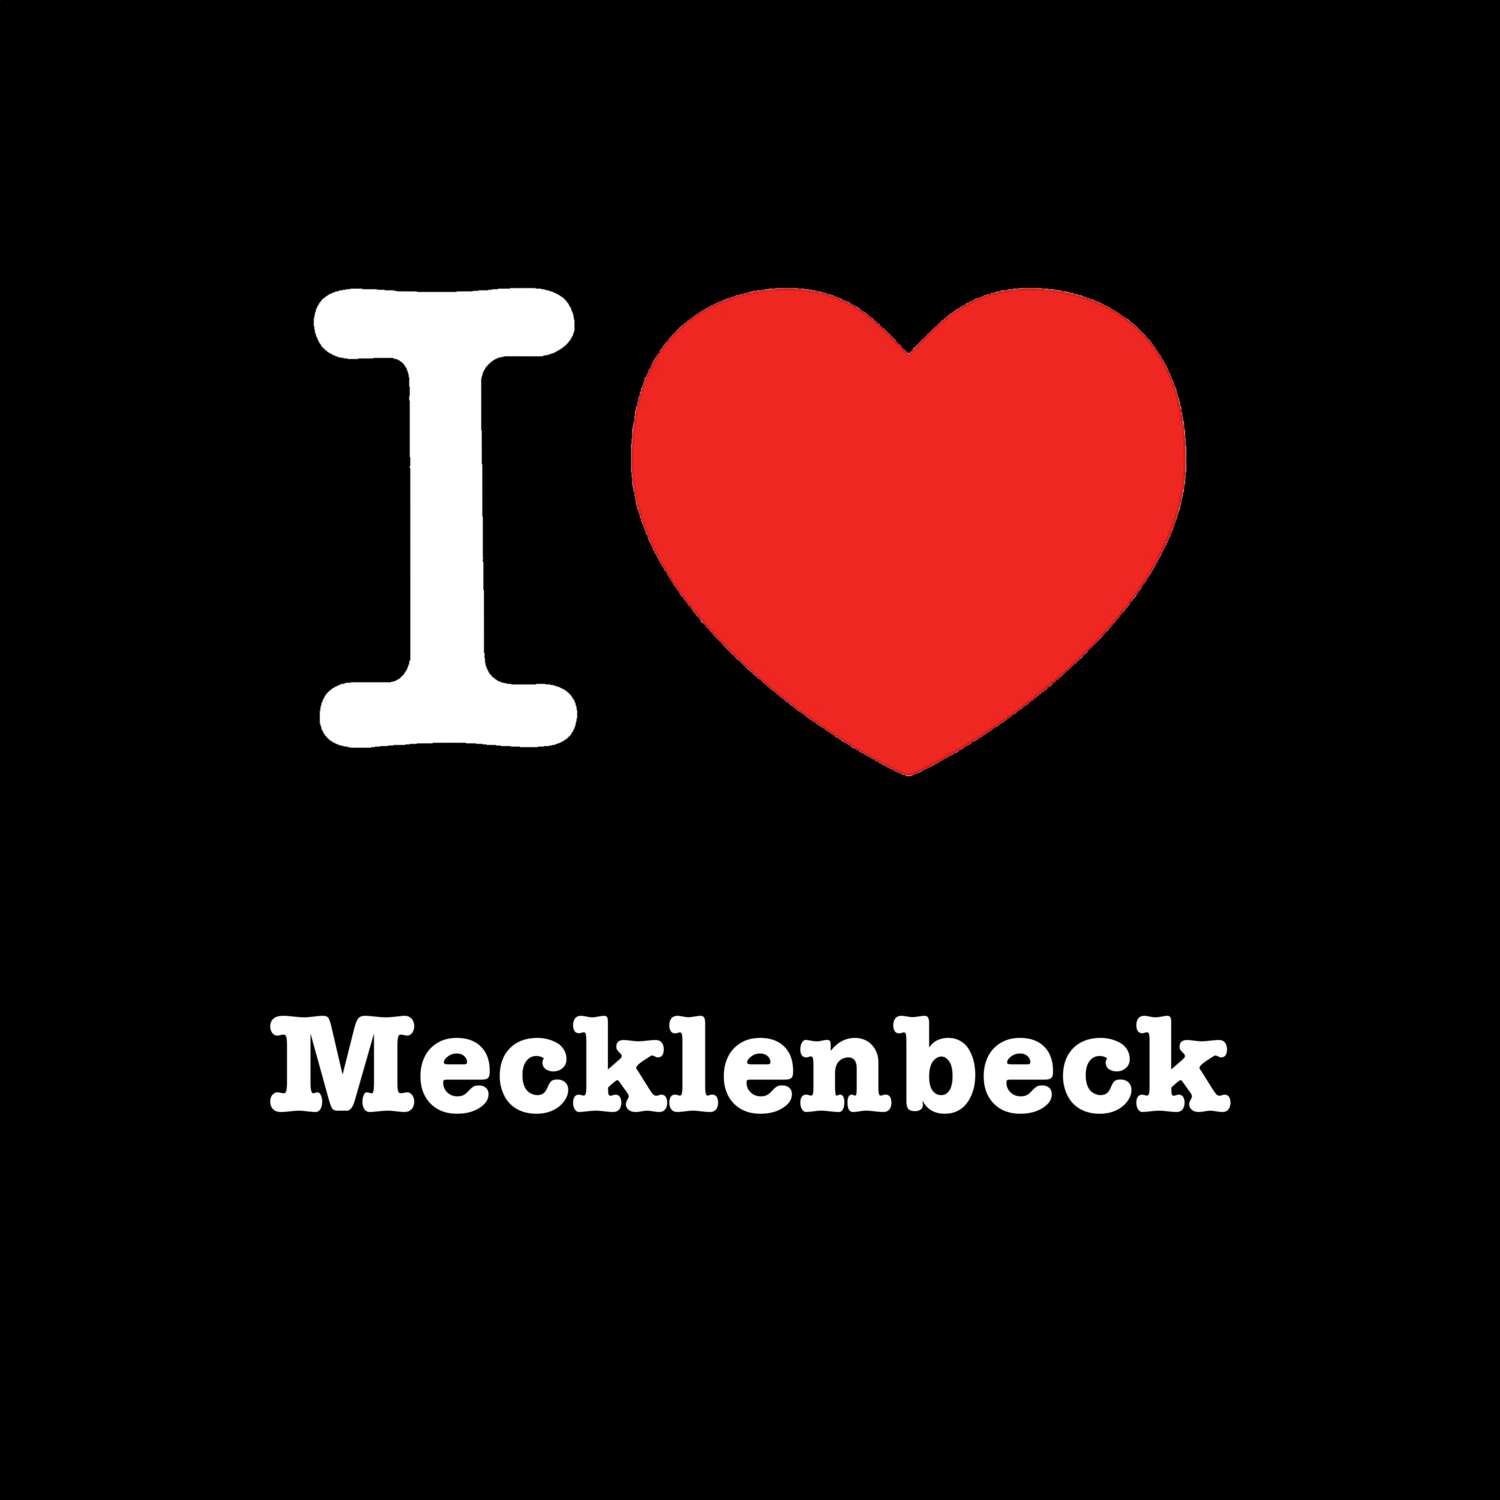 Mecklenbeck T-Shirt »I love«